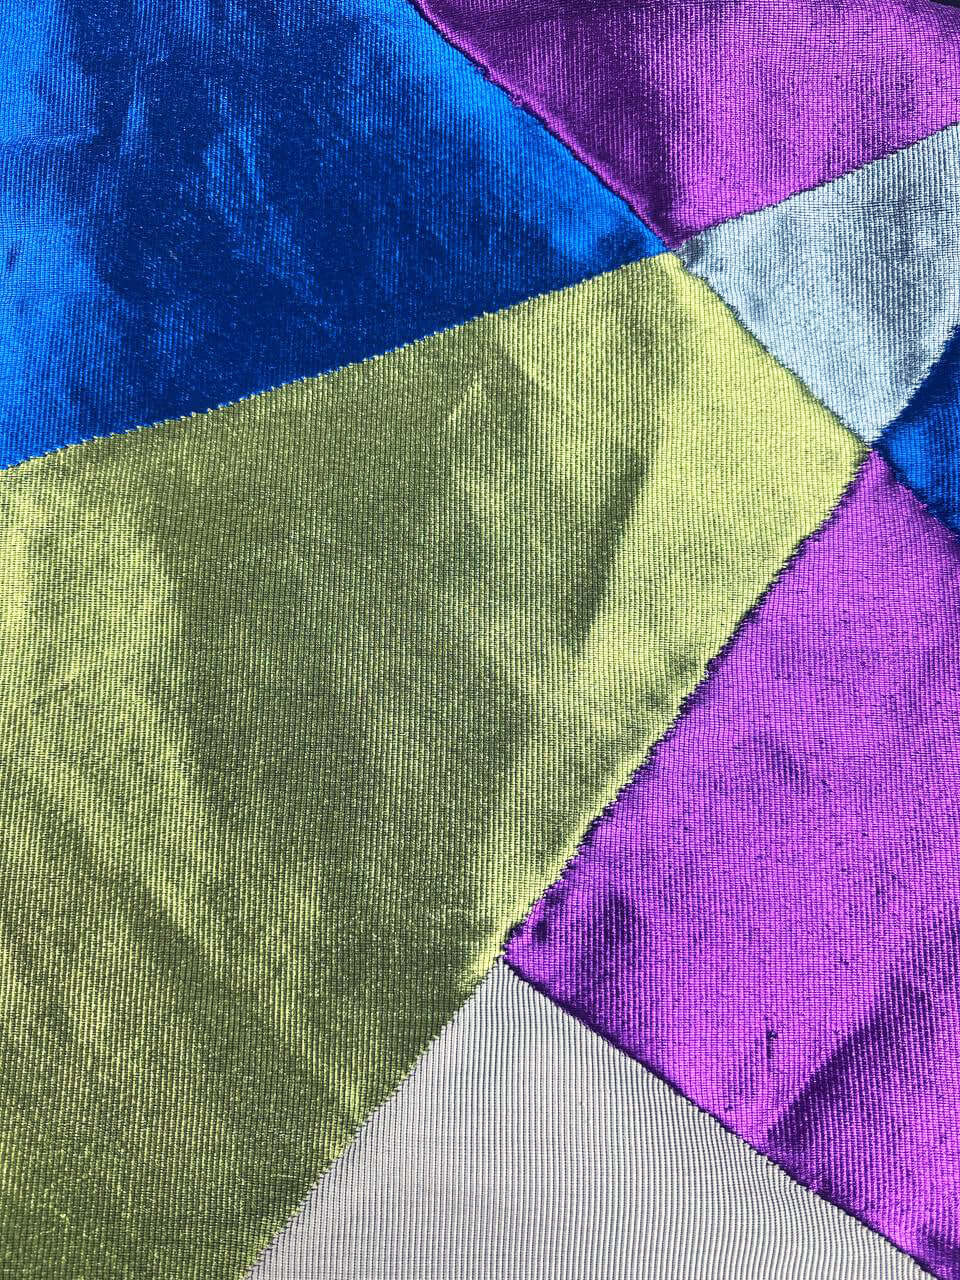 Luminesque Blue Sapphire handwoven silk songket shawl textile